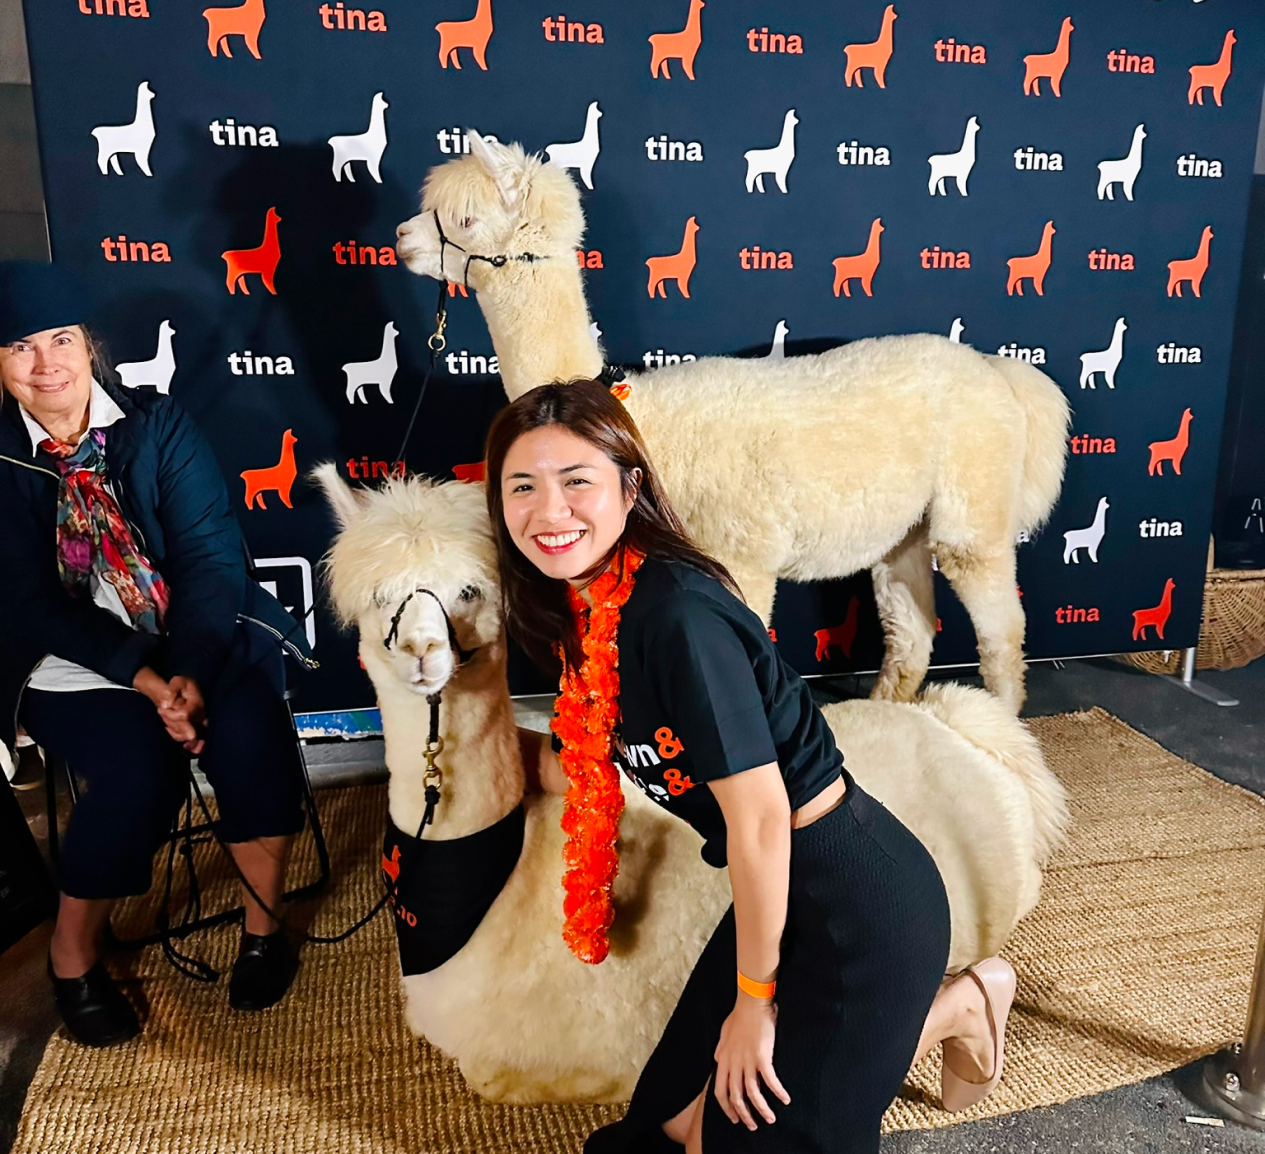 Betty with a llama